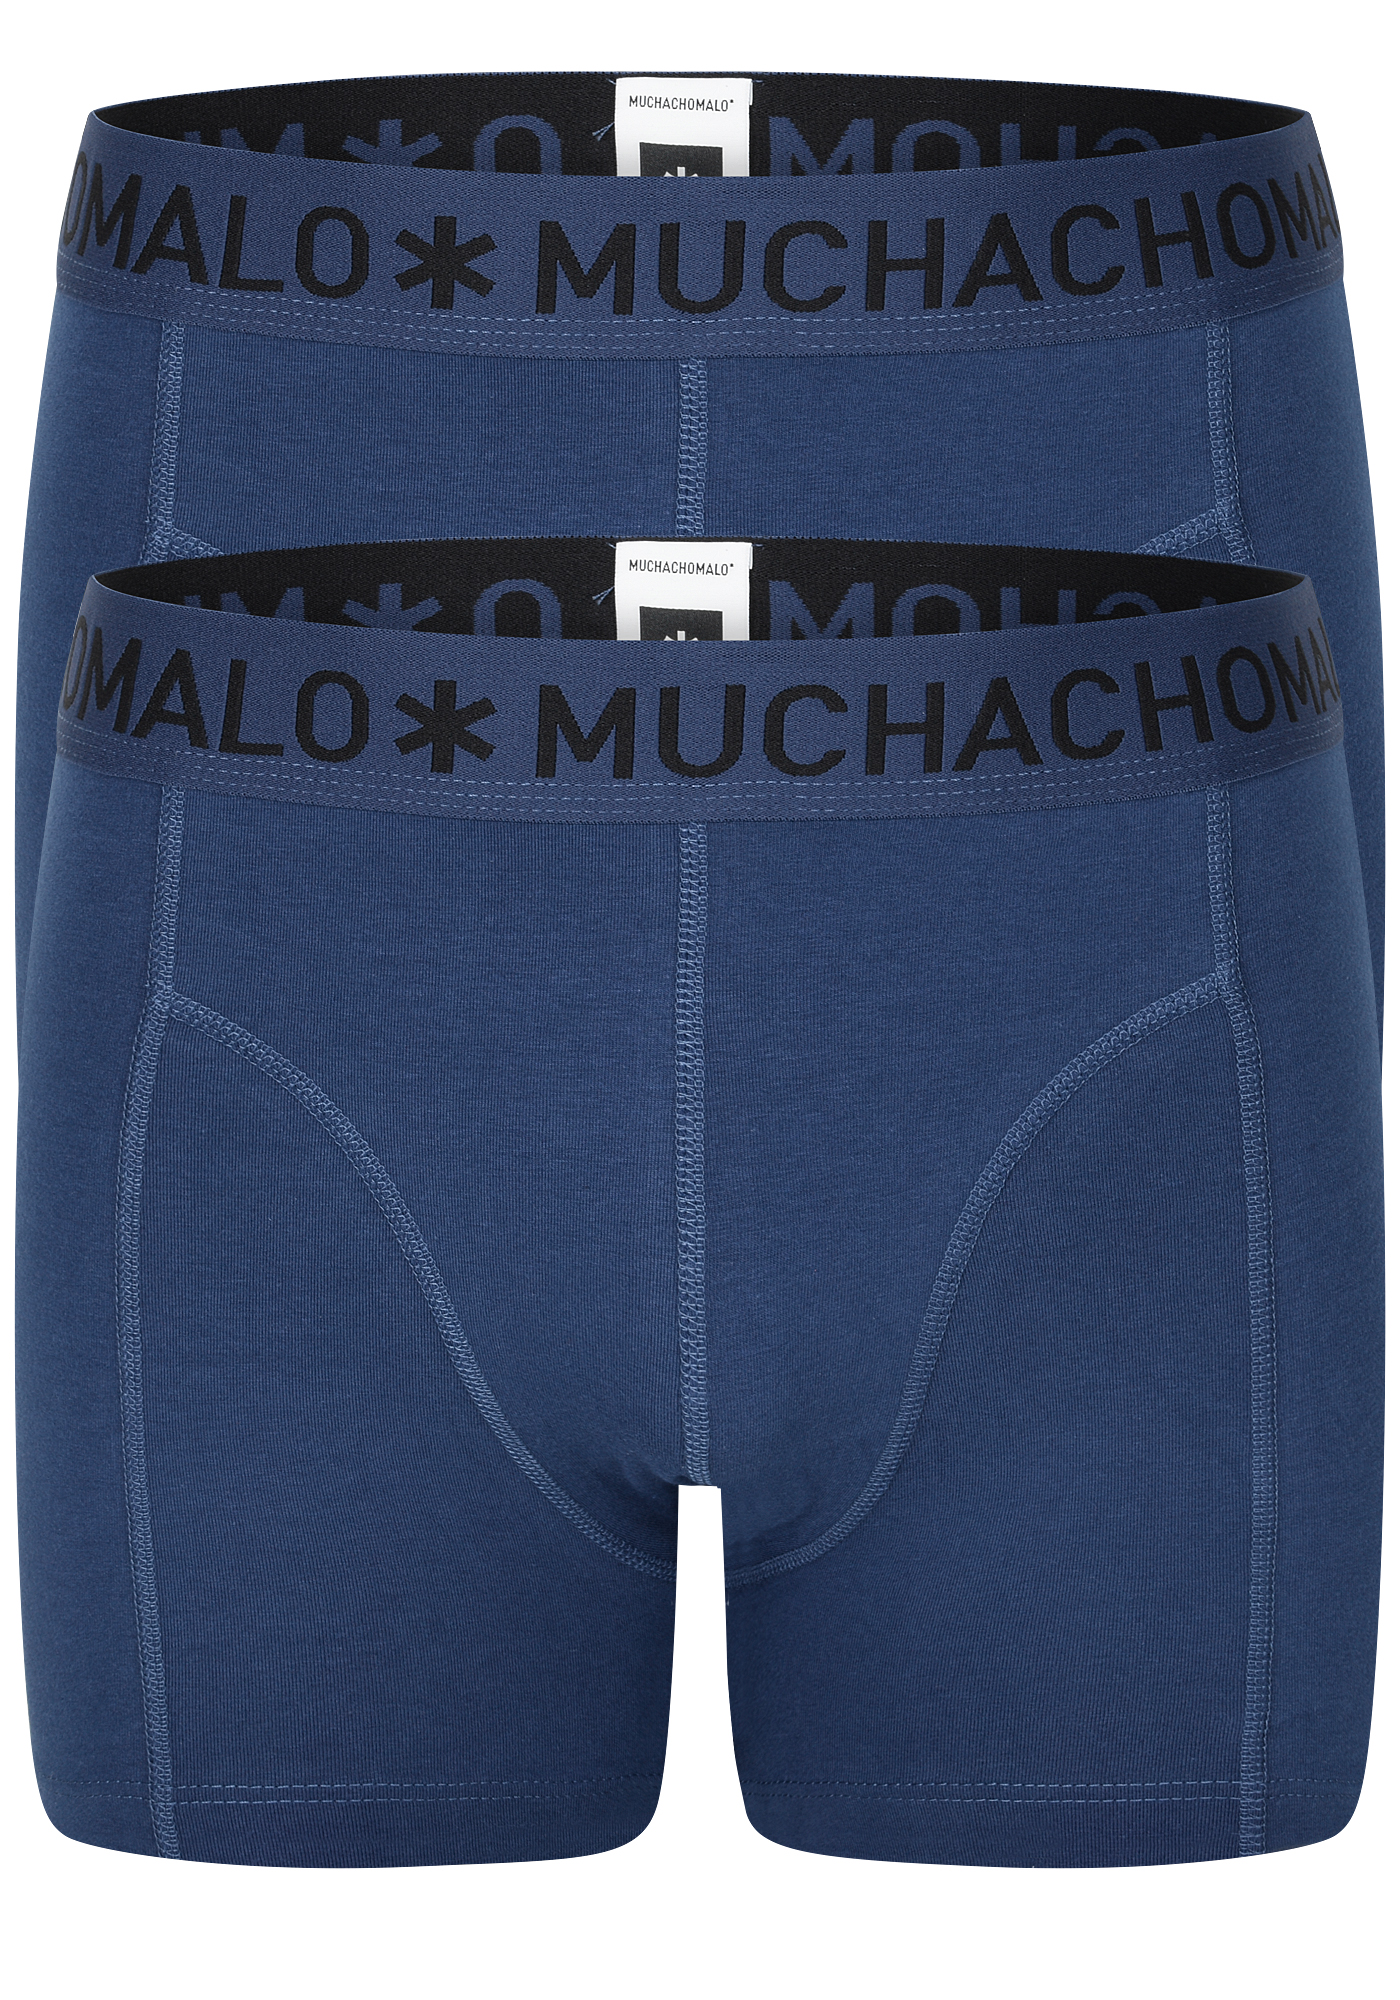 straffen vervormen knal Muchachomalo boxershorts, 2-pack, blauw - SALE tot 70% korting